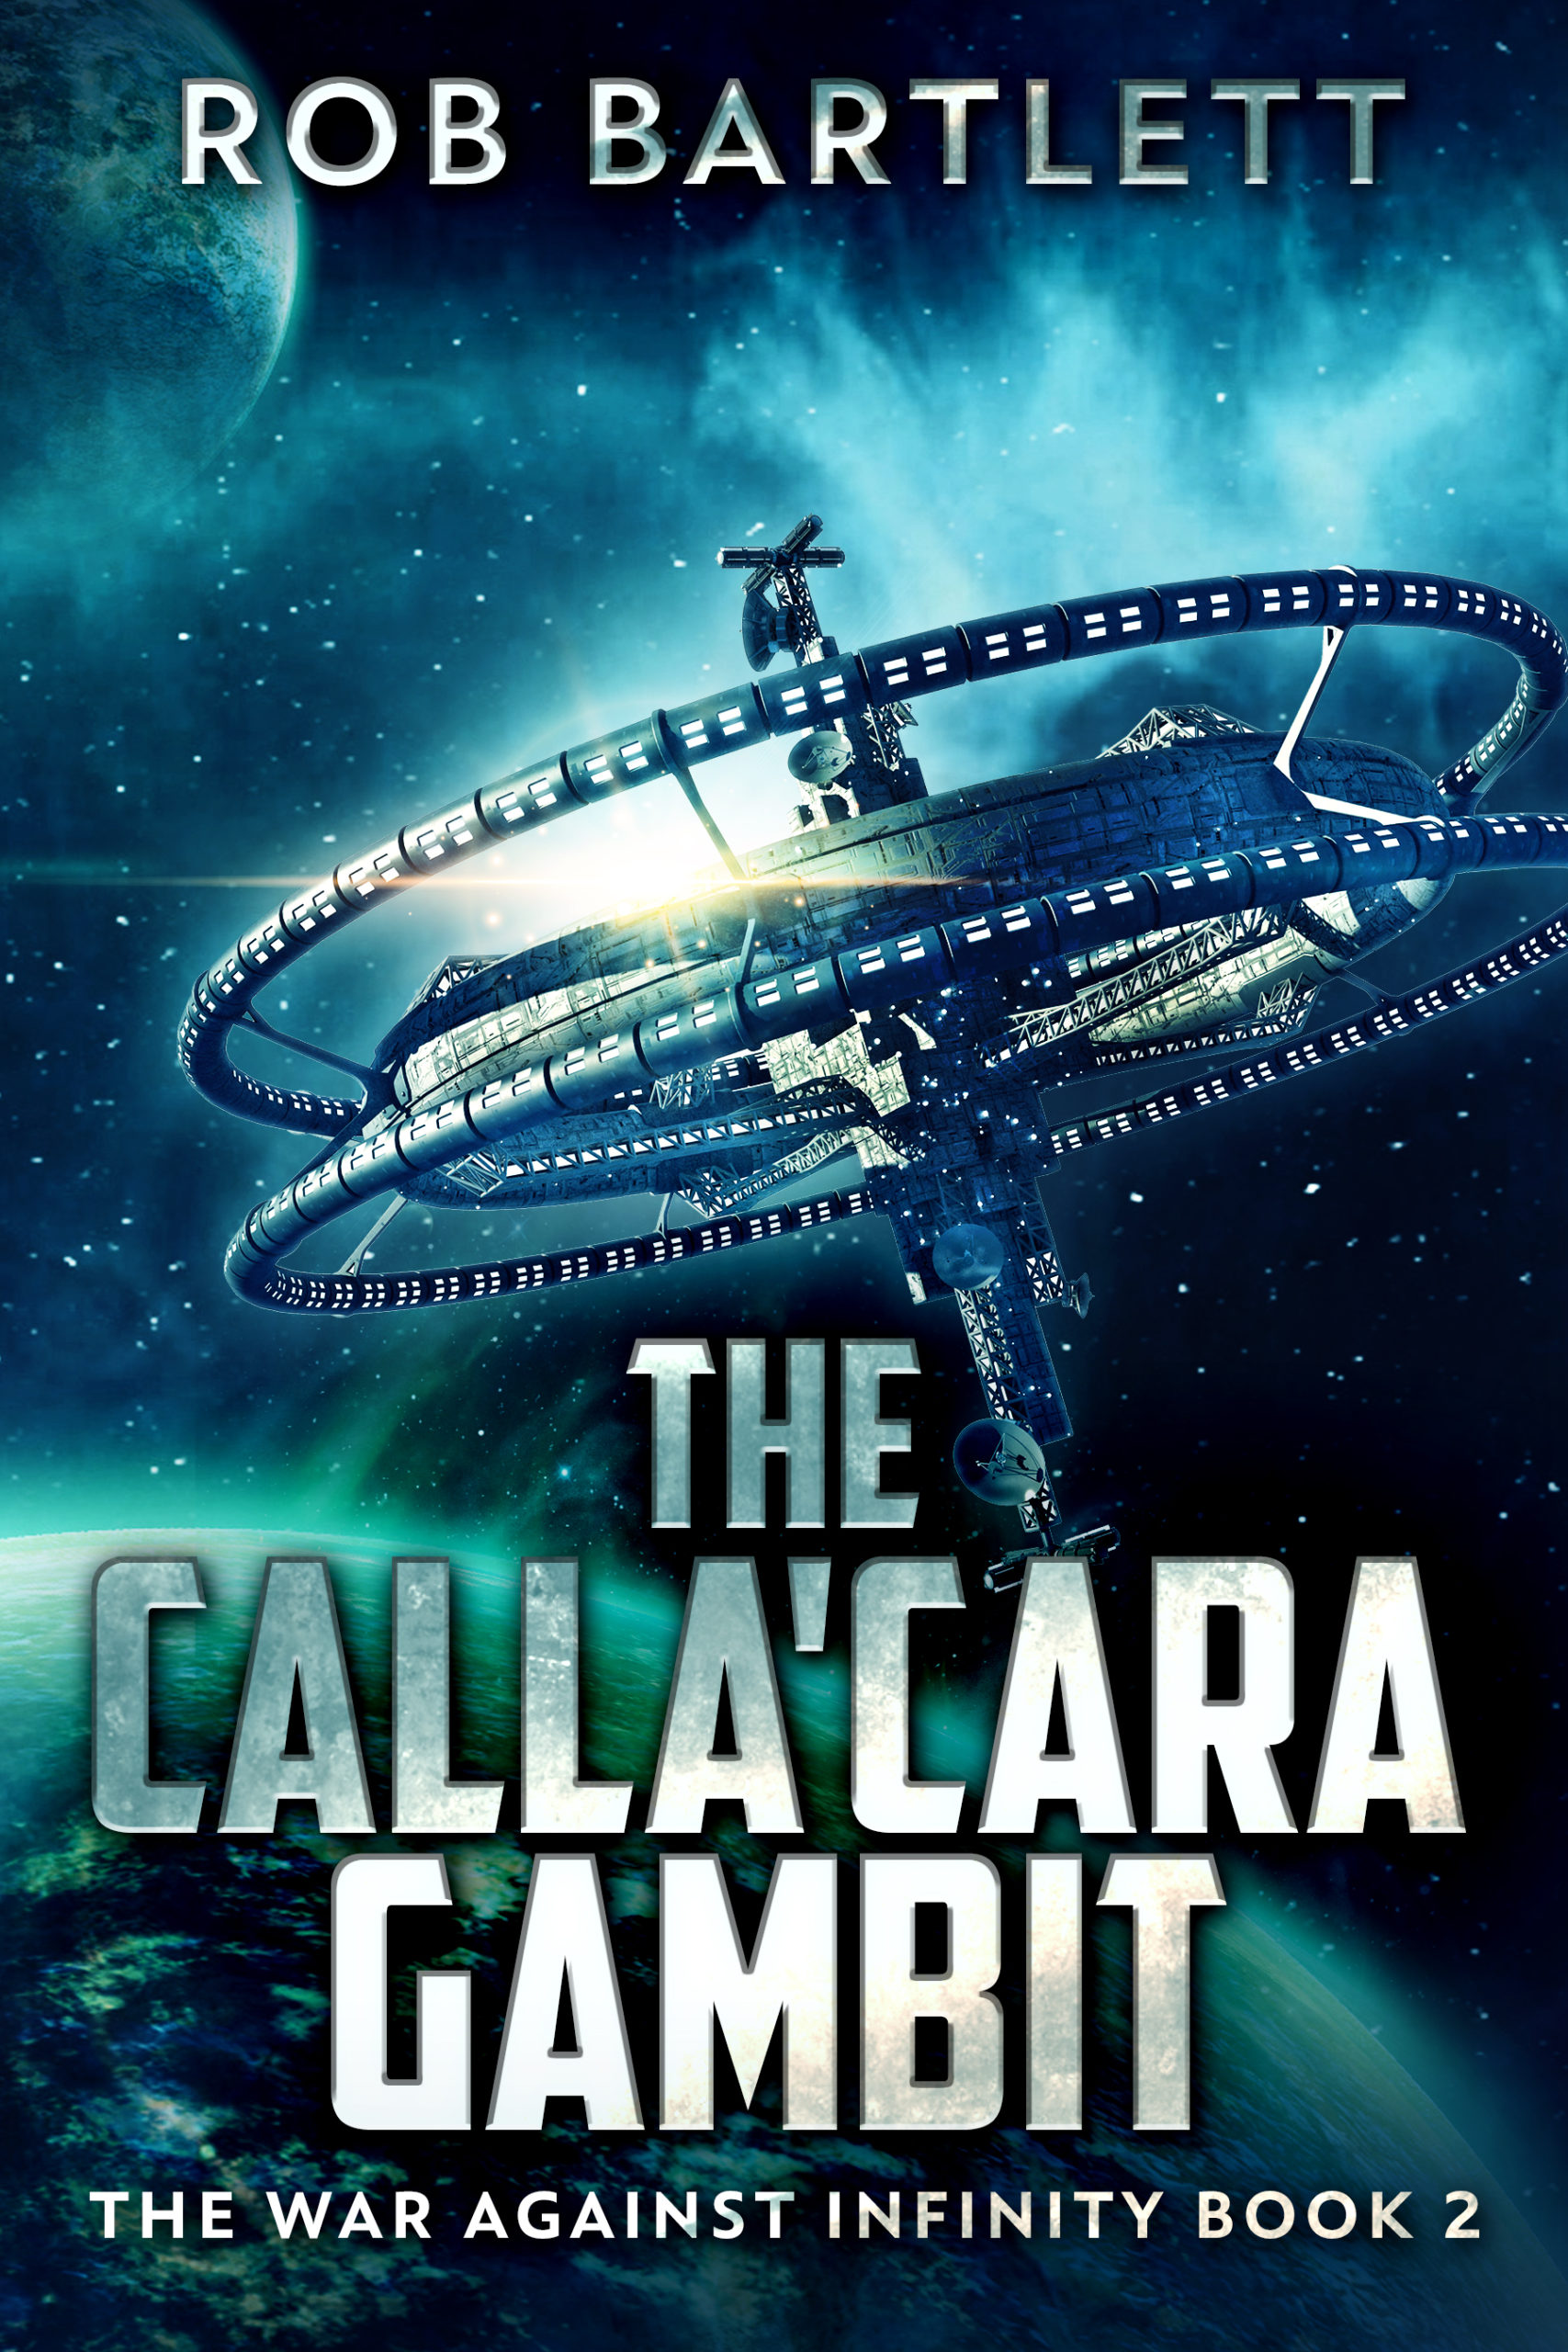 The Calla’cara Gambit by Rob Bartlett